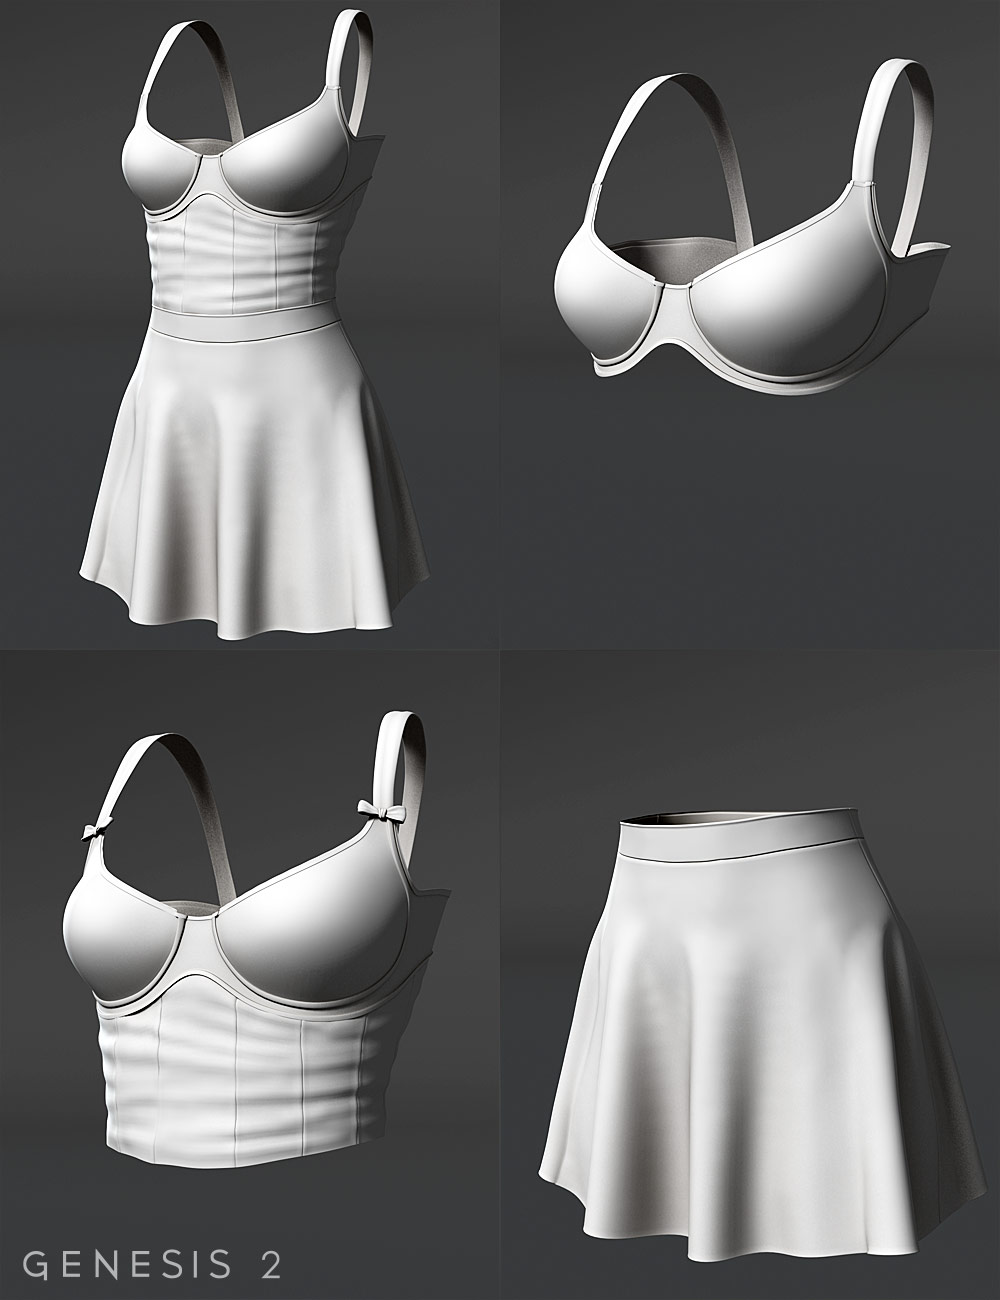 Room Service for Genesis 2 Female(s) by: 4blueyes, 3D Models by Daz 3D